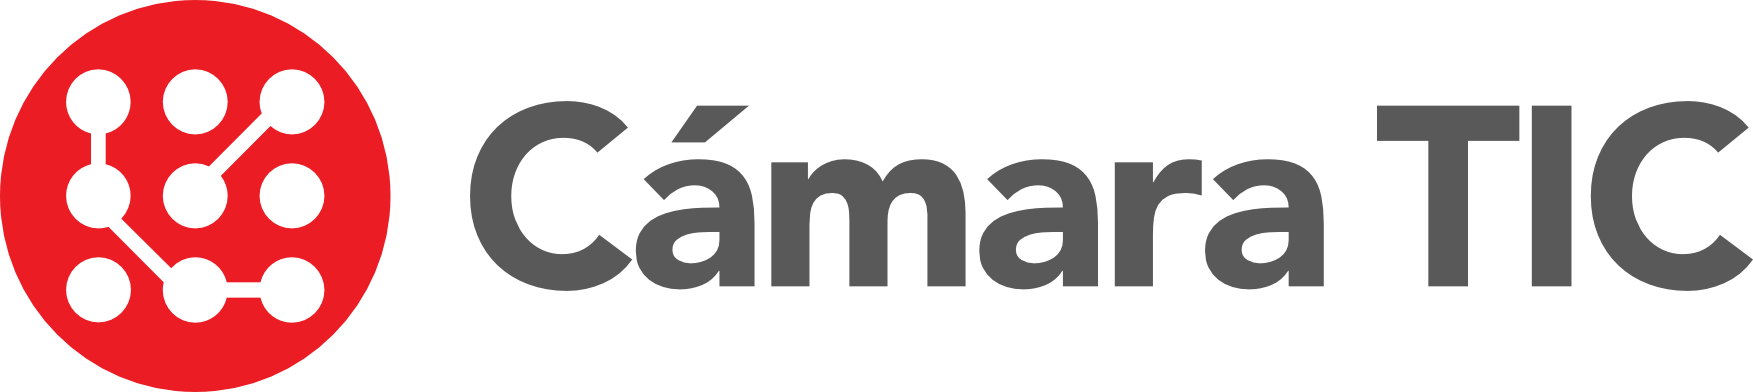 Logo-CamaraTIC-2020-2022